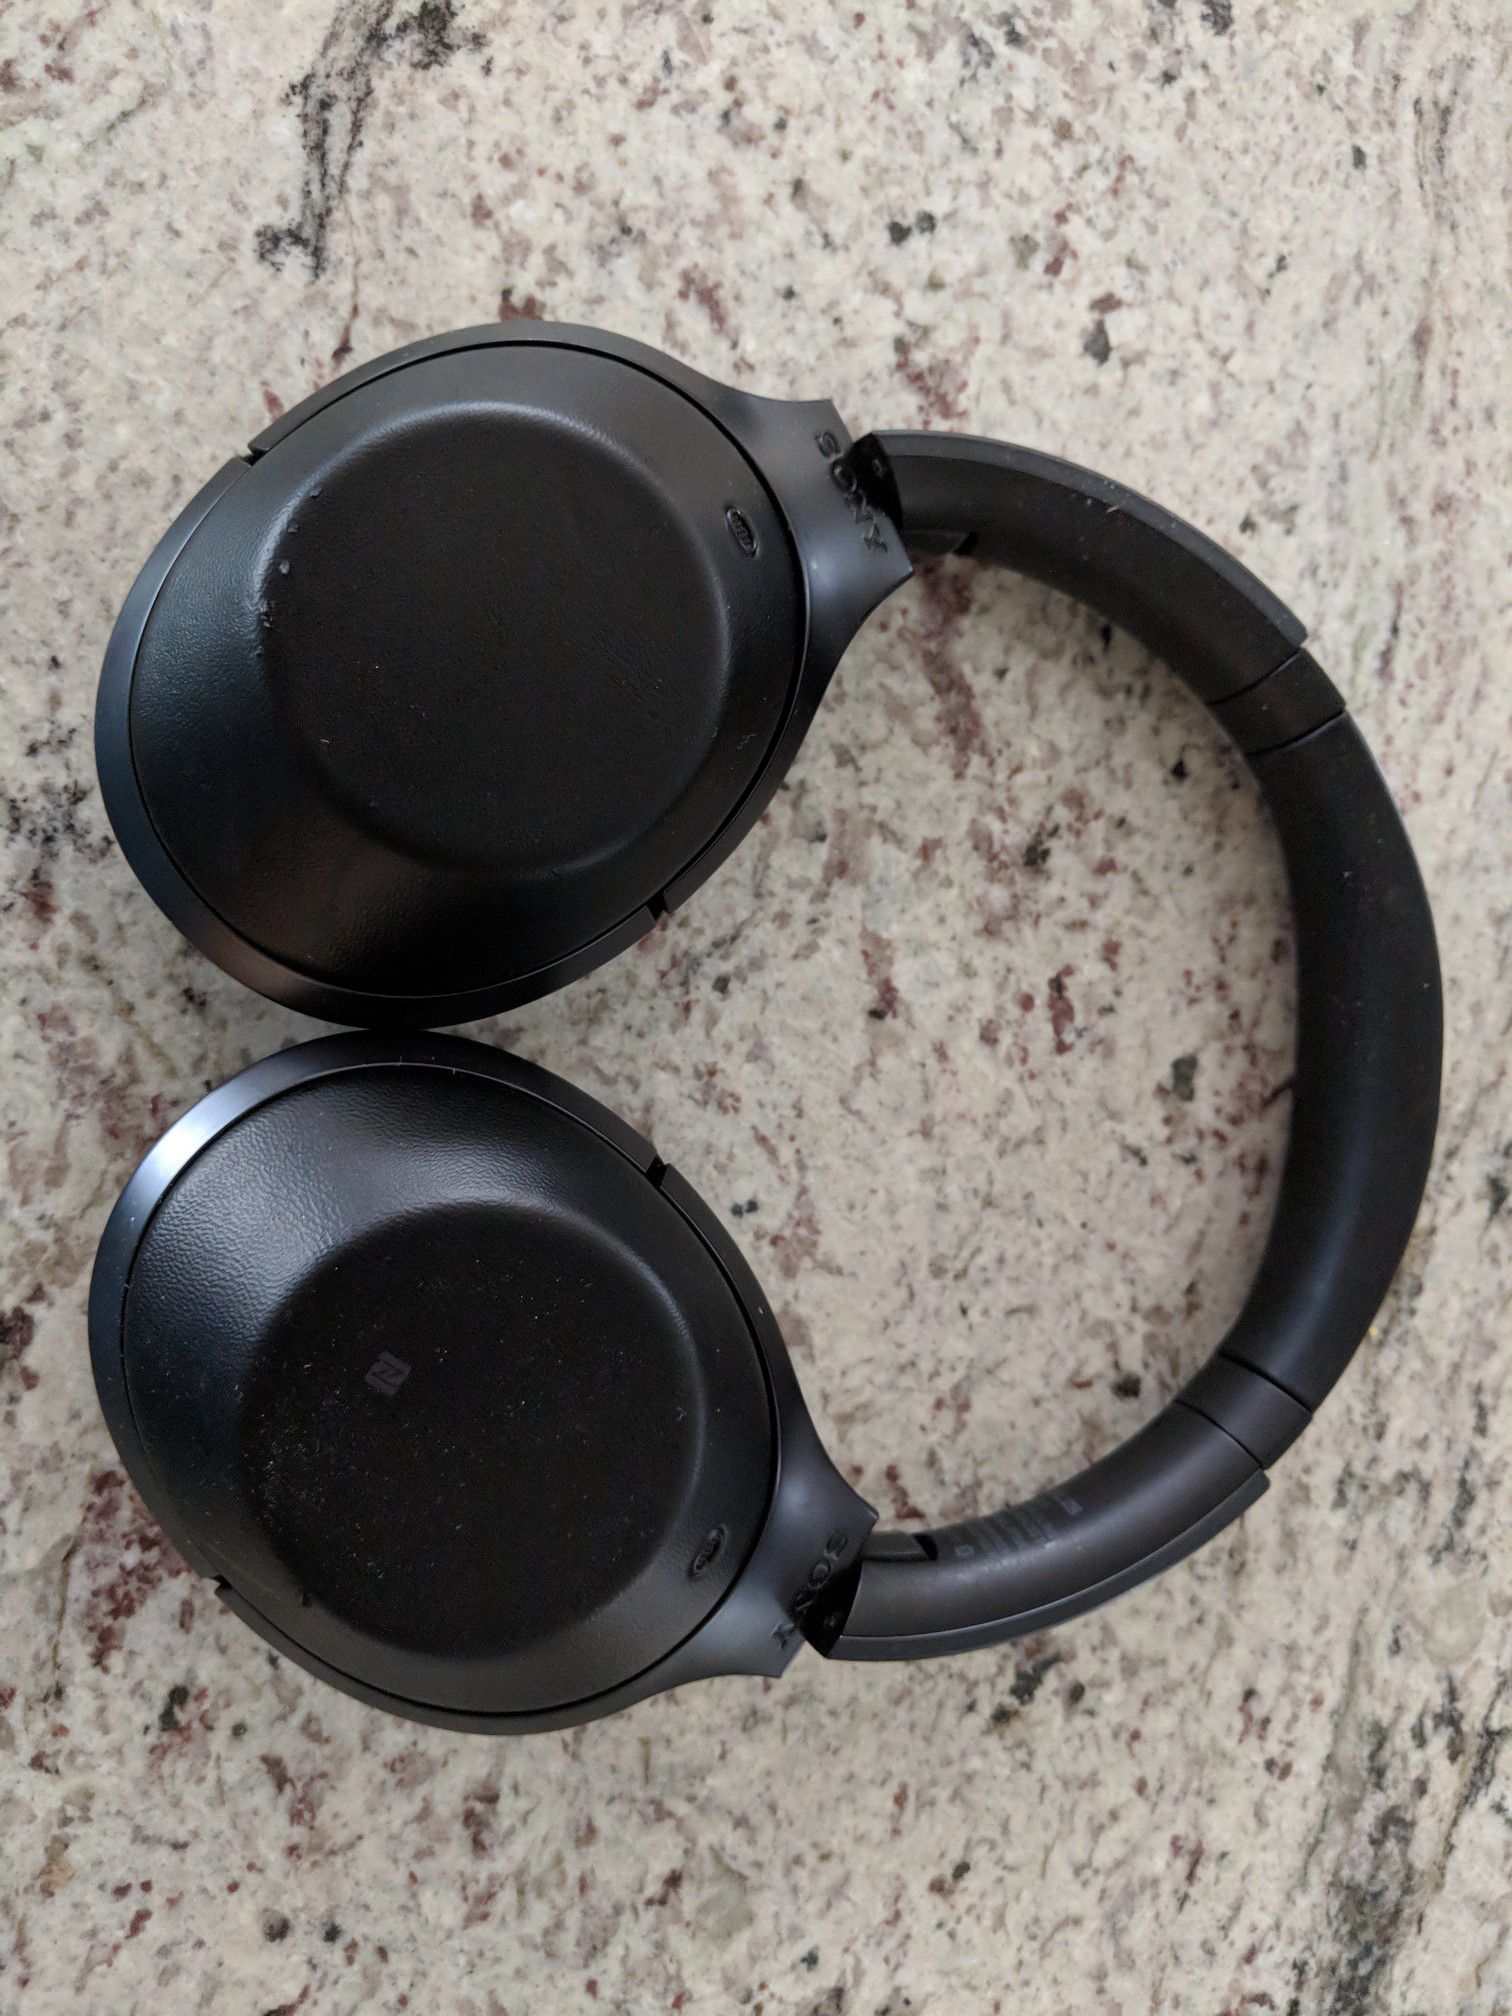 Sony mdr-1000x Bluetooth wireless headphones